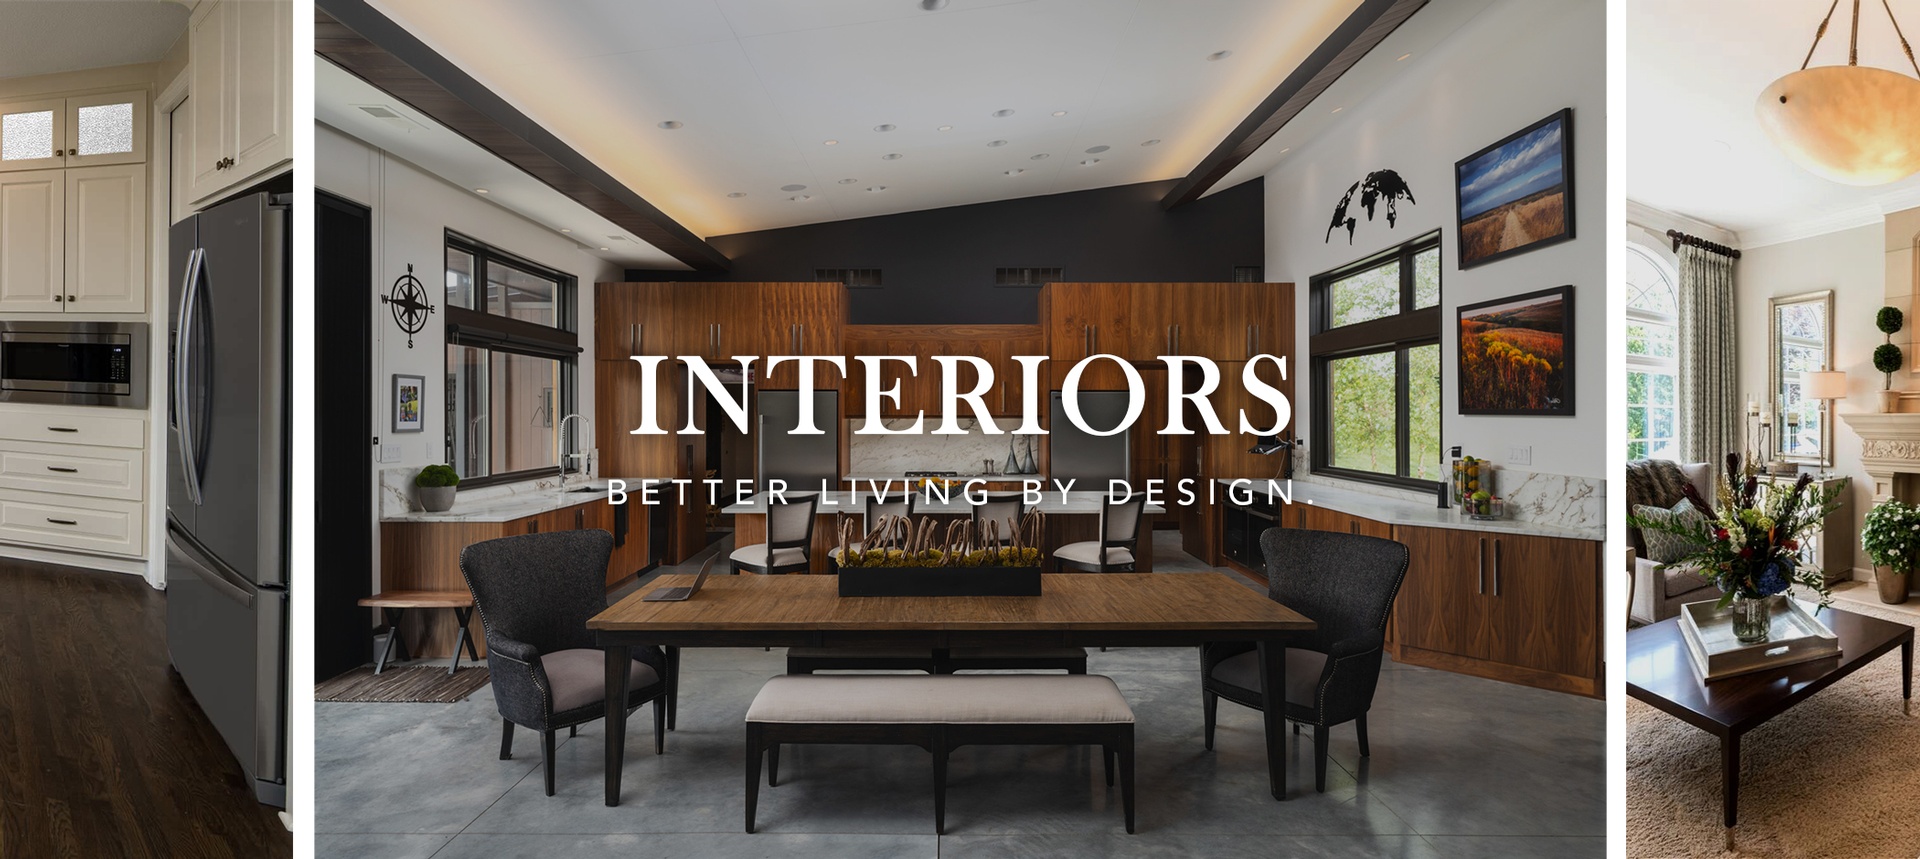 Interior Design Services by Interior Designer Kansas City at R . Designs, LLC